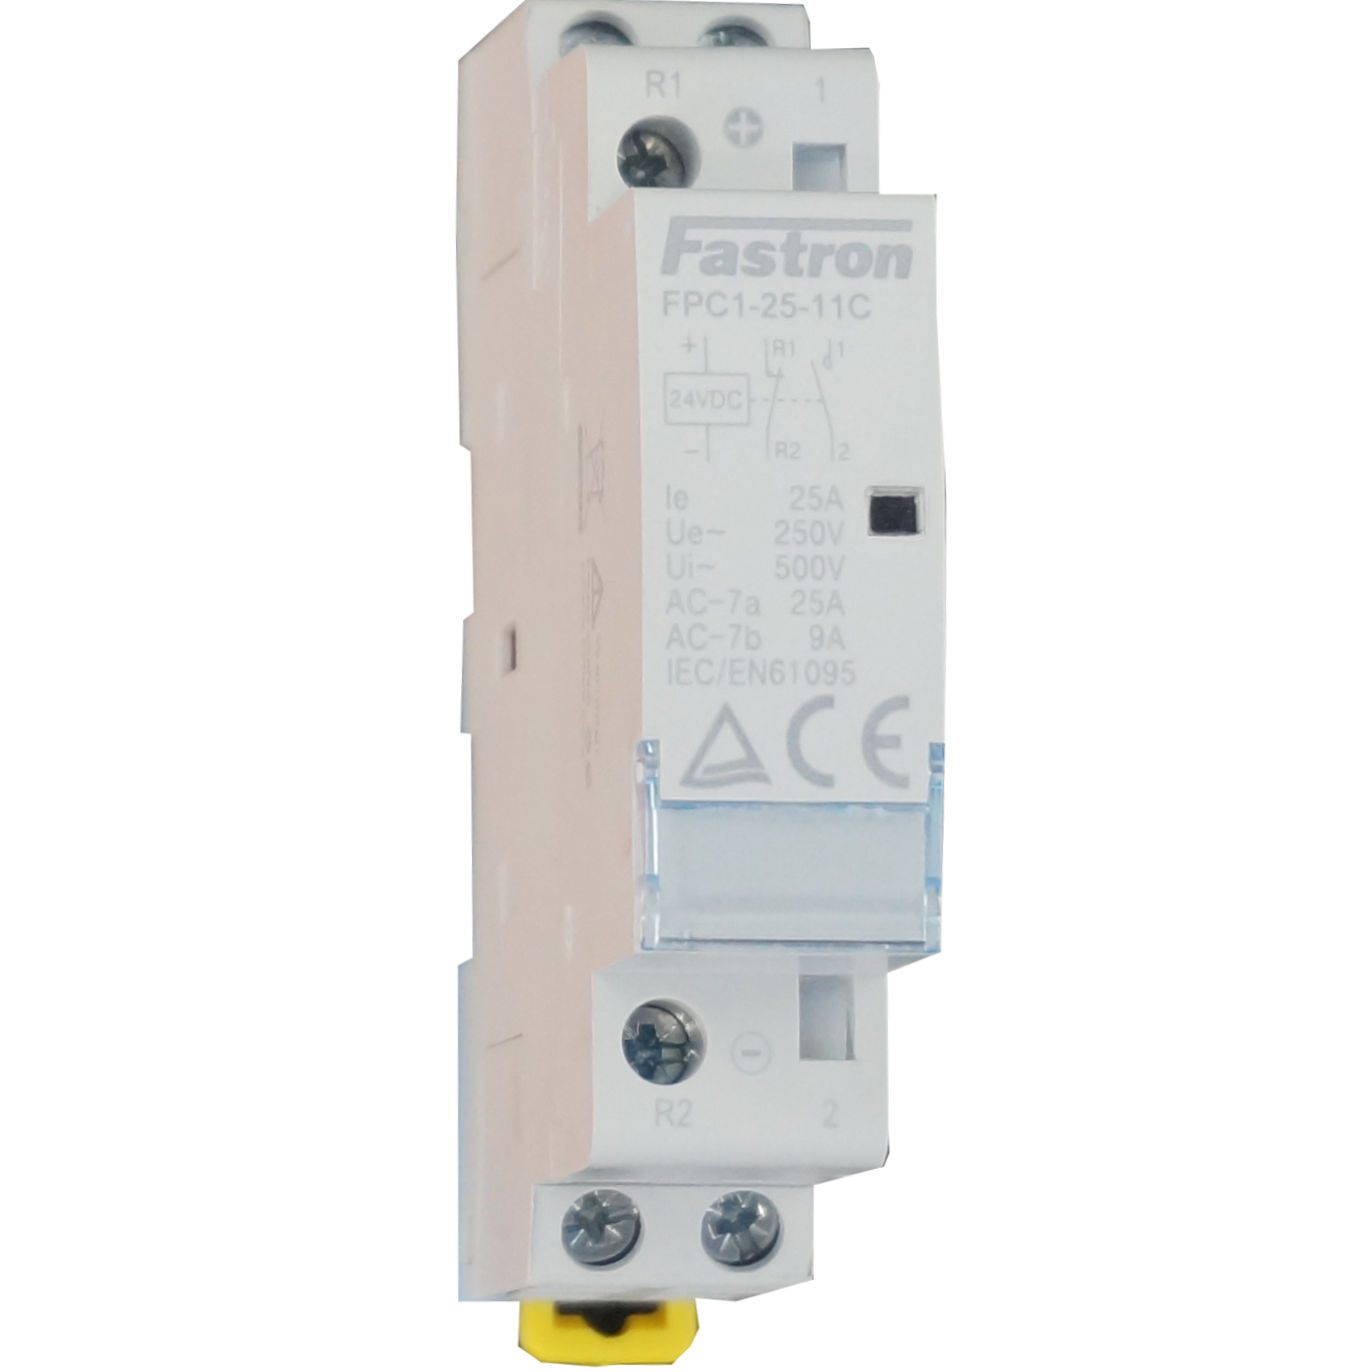 FPC1-25-11-24VAC/DC, Two Pole 1 x SPST NO, 1 x SPST NC Modular Contactor 240VAC, 25 Amp, 24VDC Control Voltage, 50/60Hz